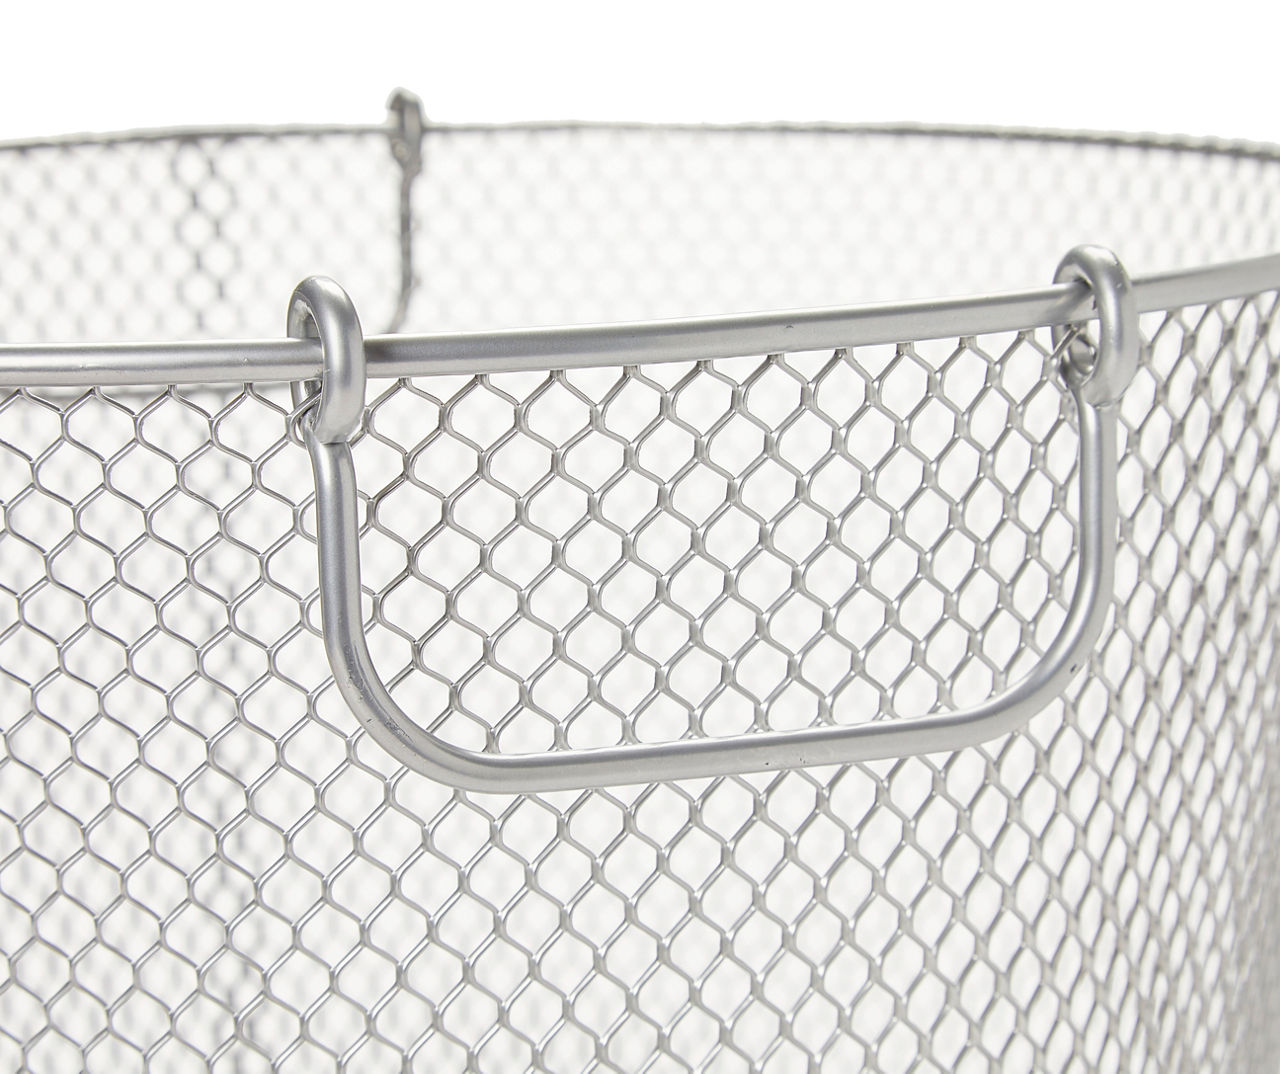 Mesh Basket: Round, Stainless Steel